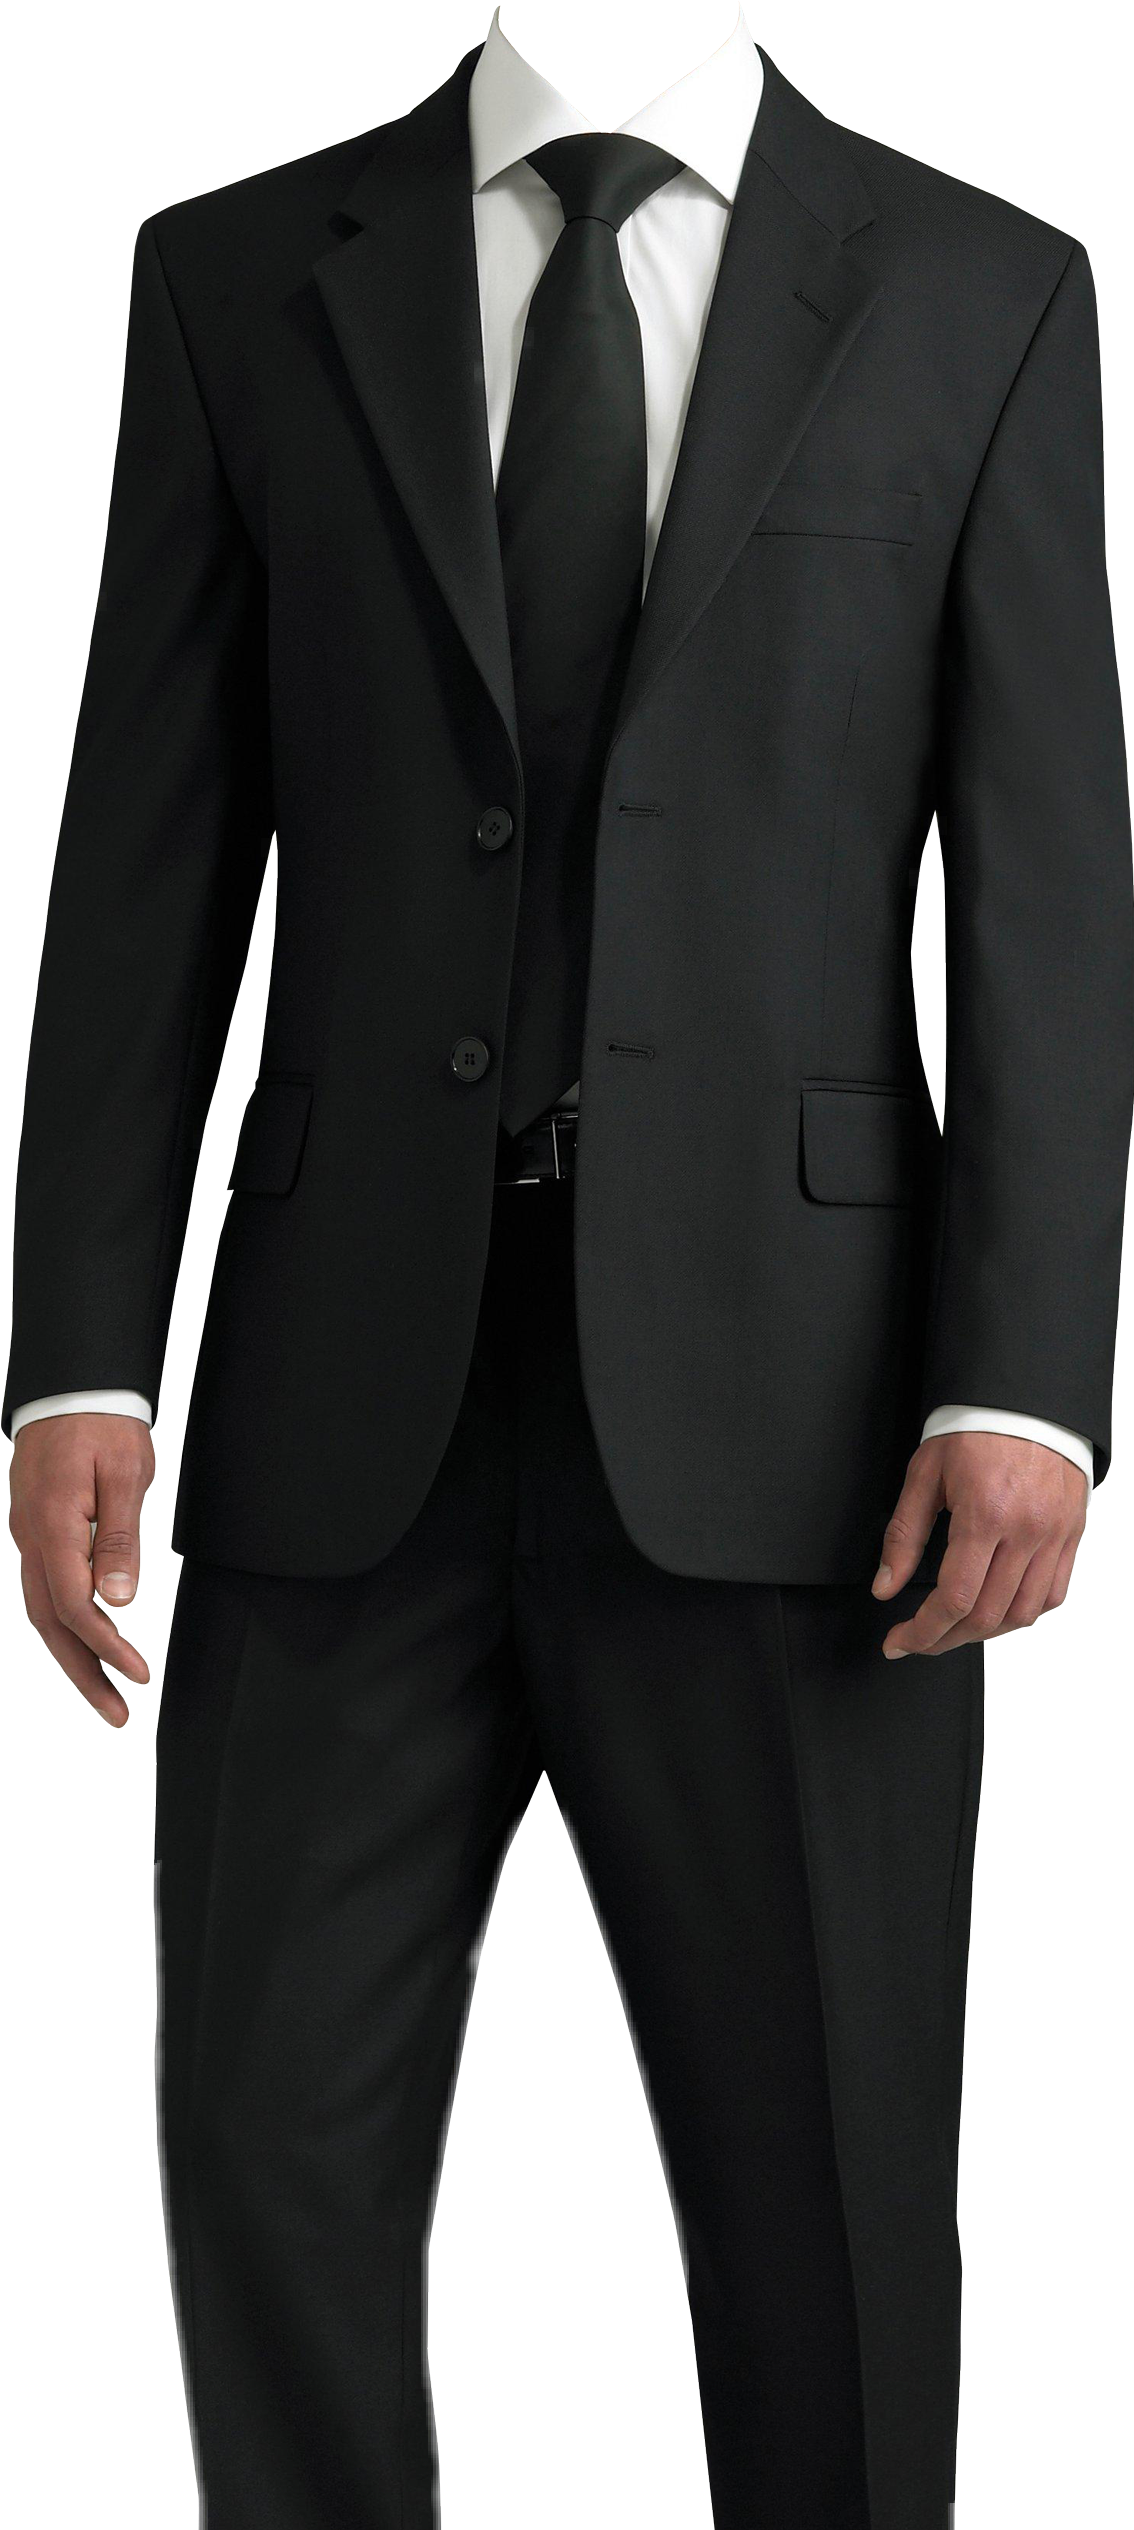 Half Length Suit in Black Color 18246164 PNG